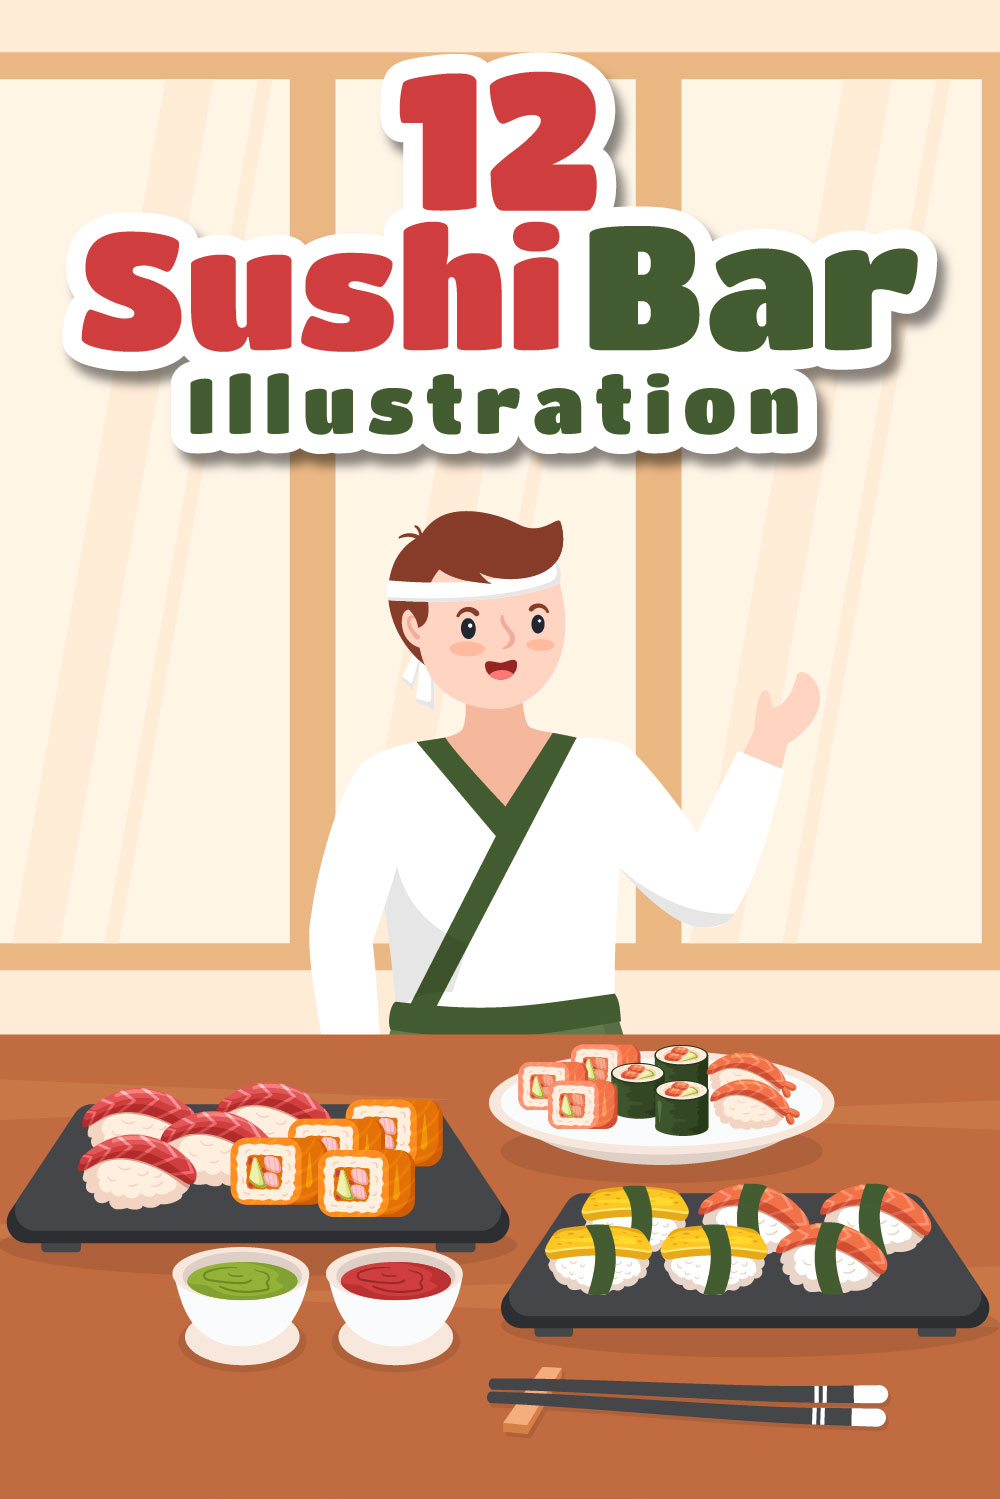 Sushi Bar Japan Asian Food Illustration pinterest image.